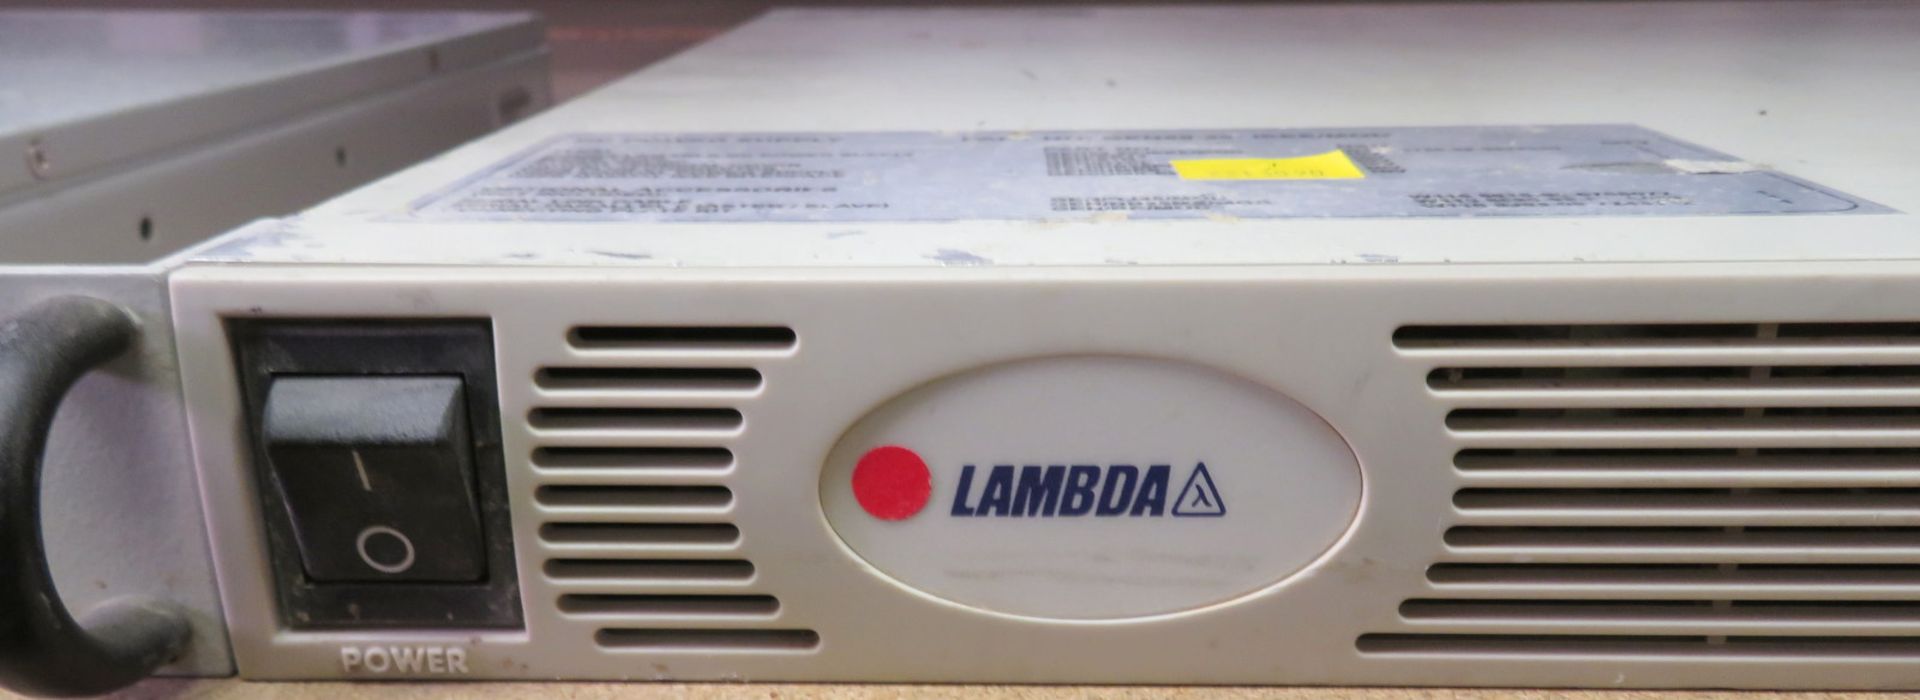 Lambda DC power supply - Image 2 of 4